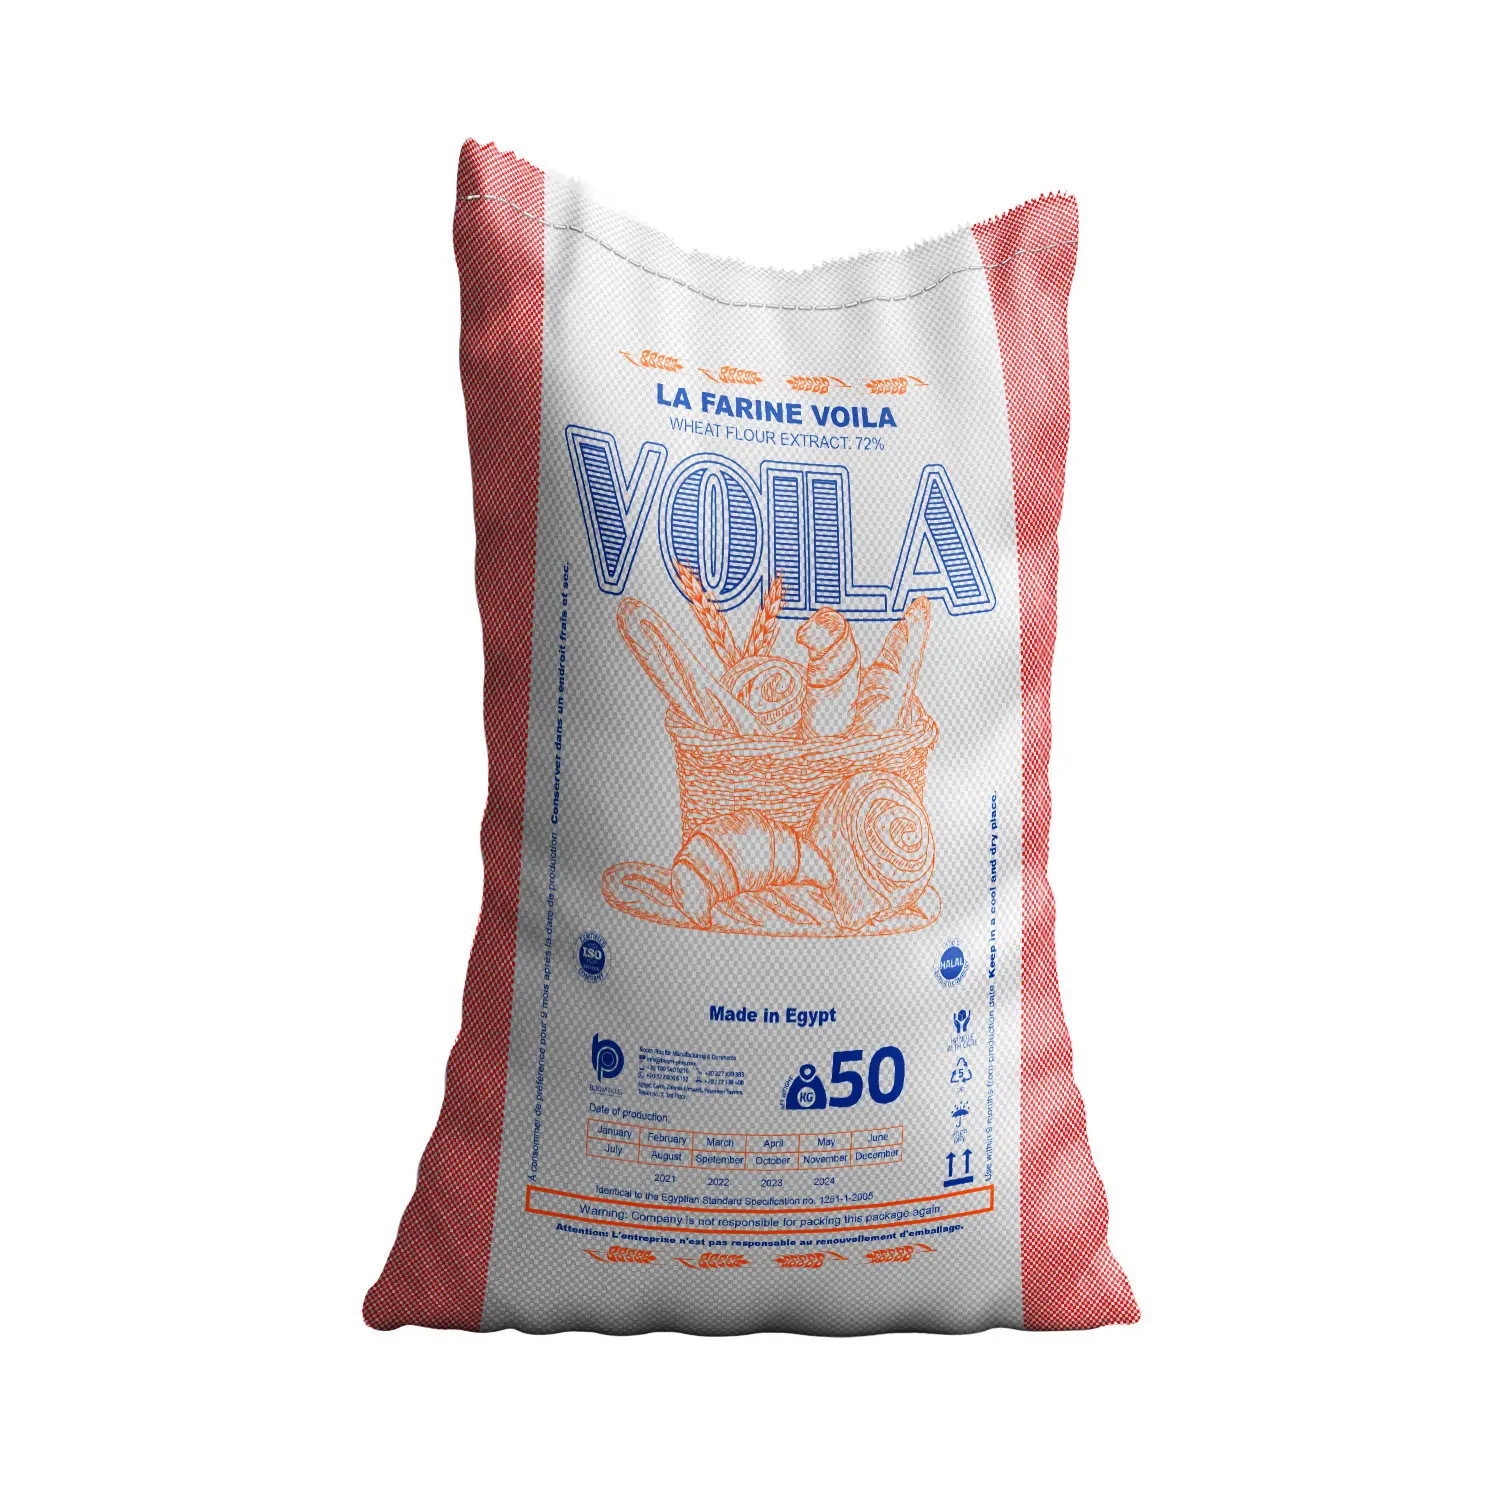 Chakki Atta Maida Wheat Flour 50 kg Voila Brand made in Egypt Low Price Long Life Premium Production